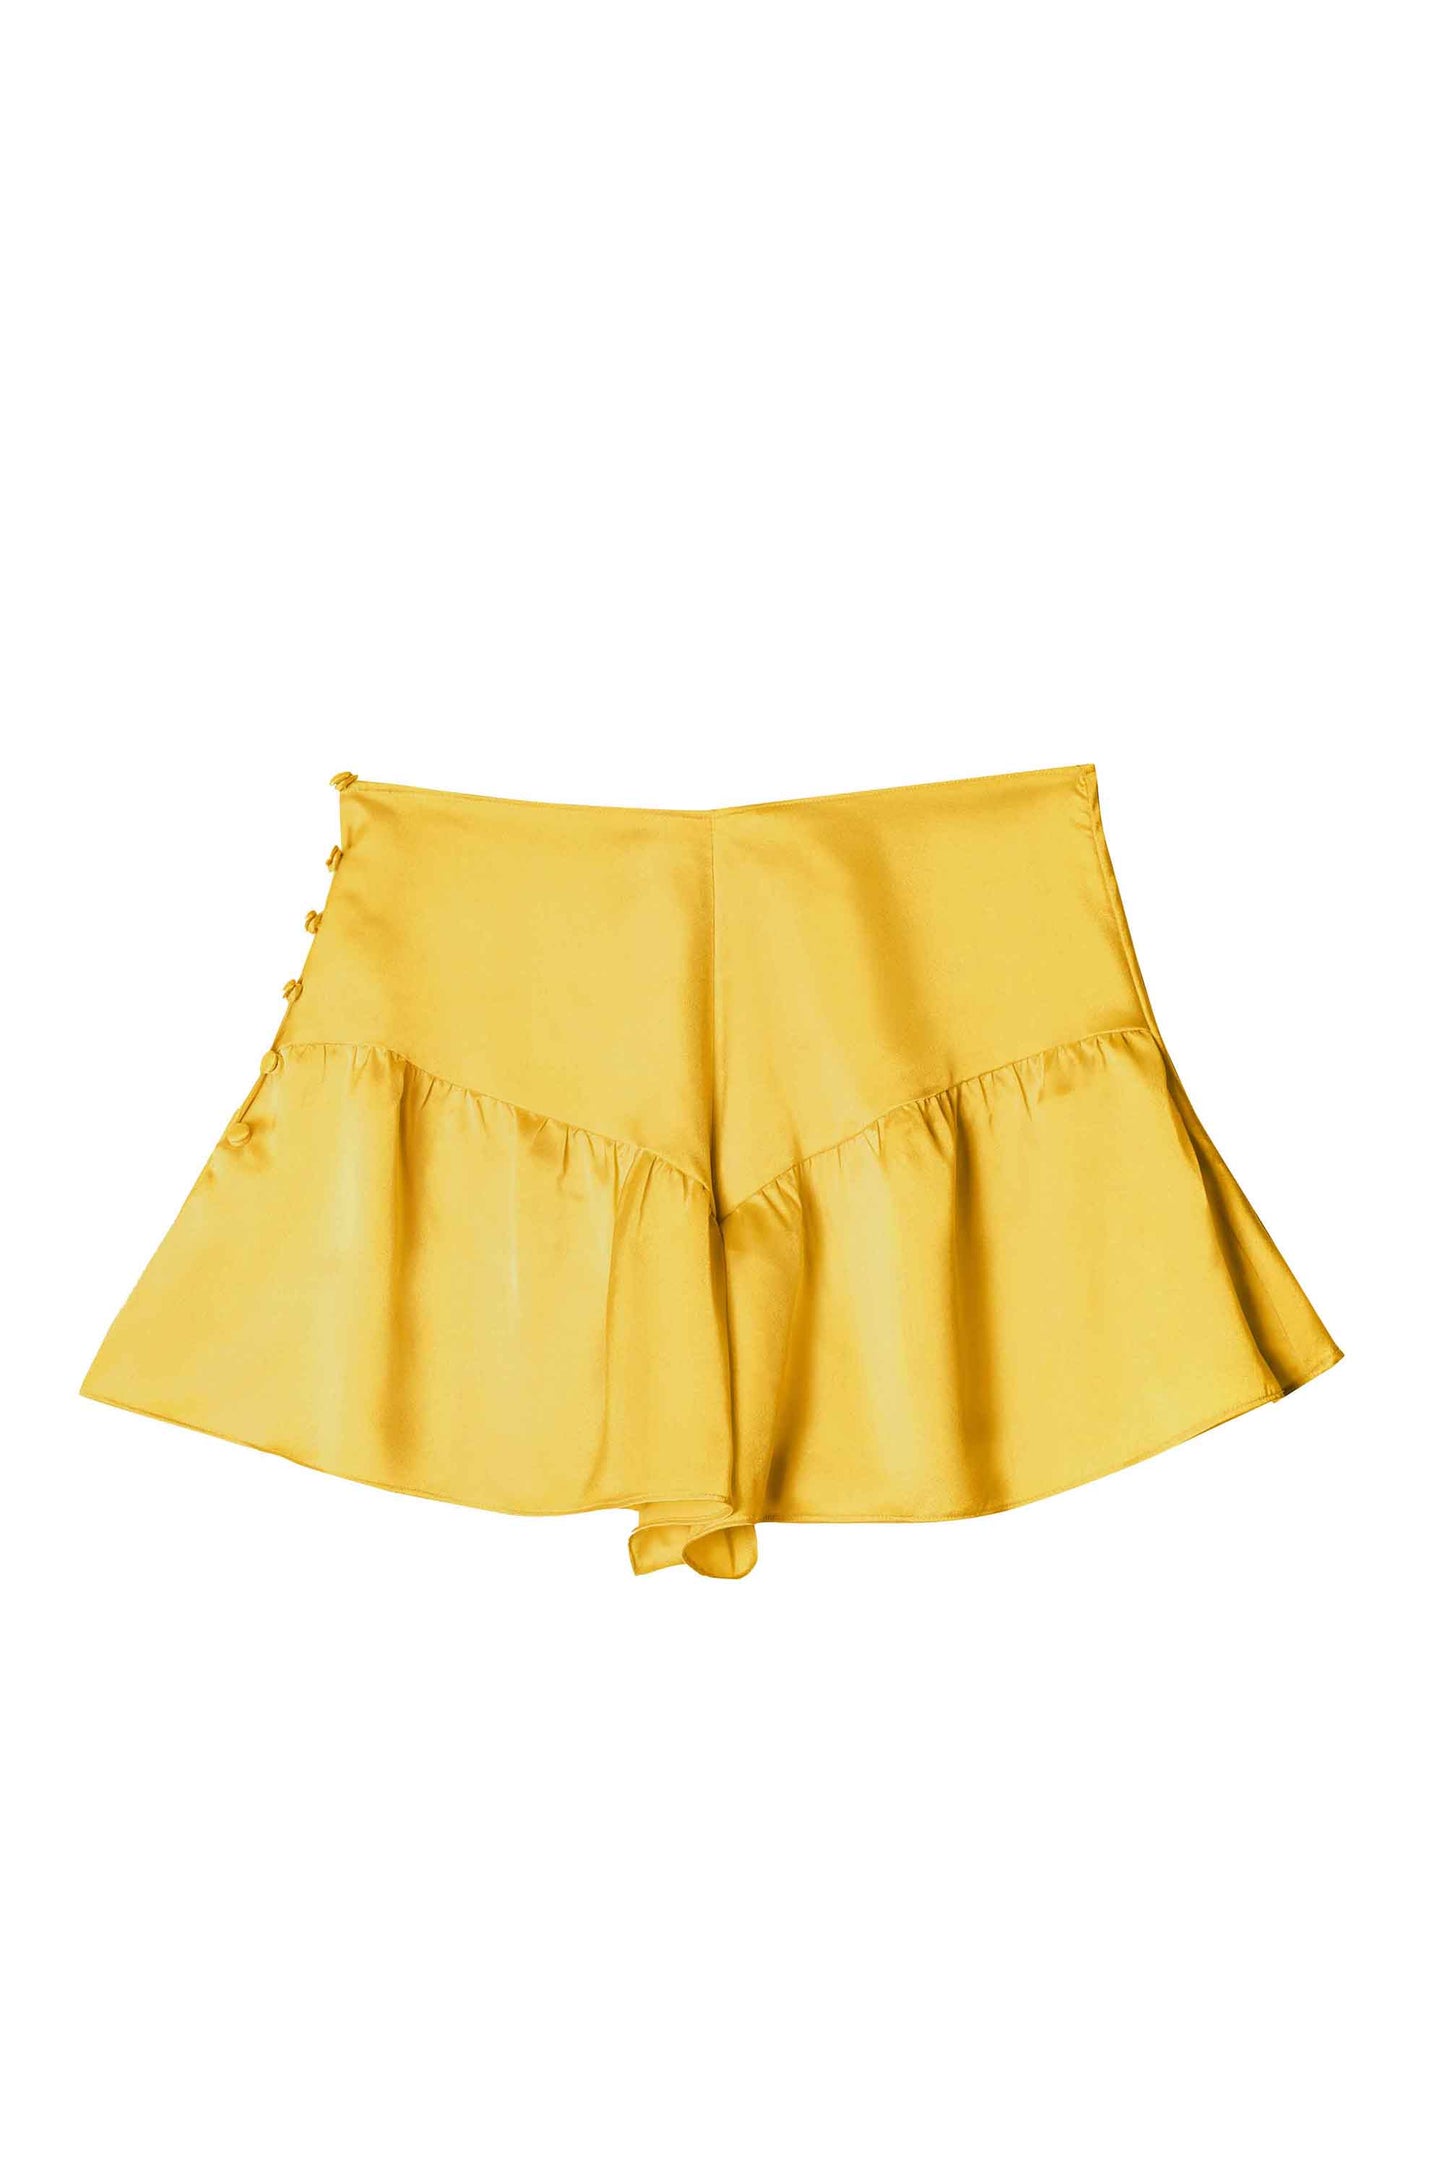 Gina Bright Yellow Satin Knickers With Sheer Floral Print Sides French Cut  Natural Waist Satin Panties by Bonboneva 